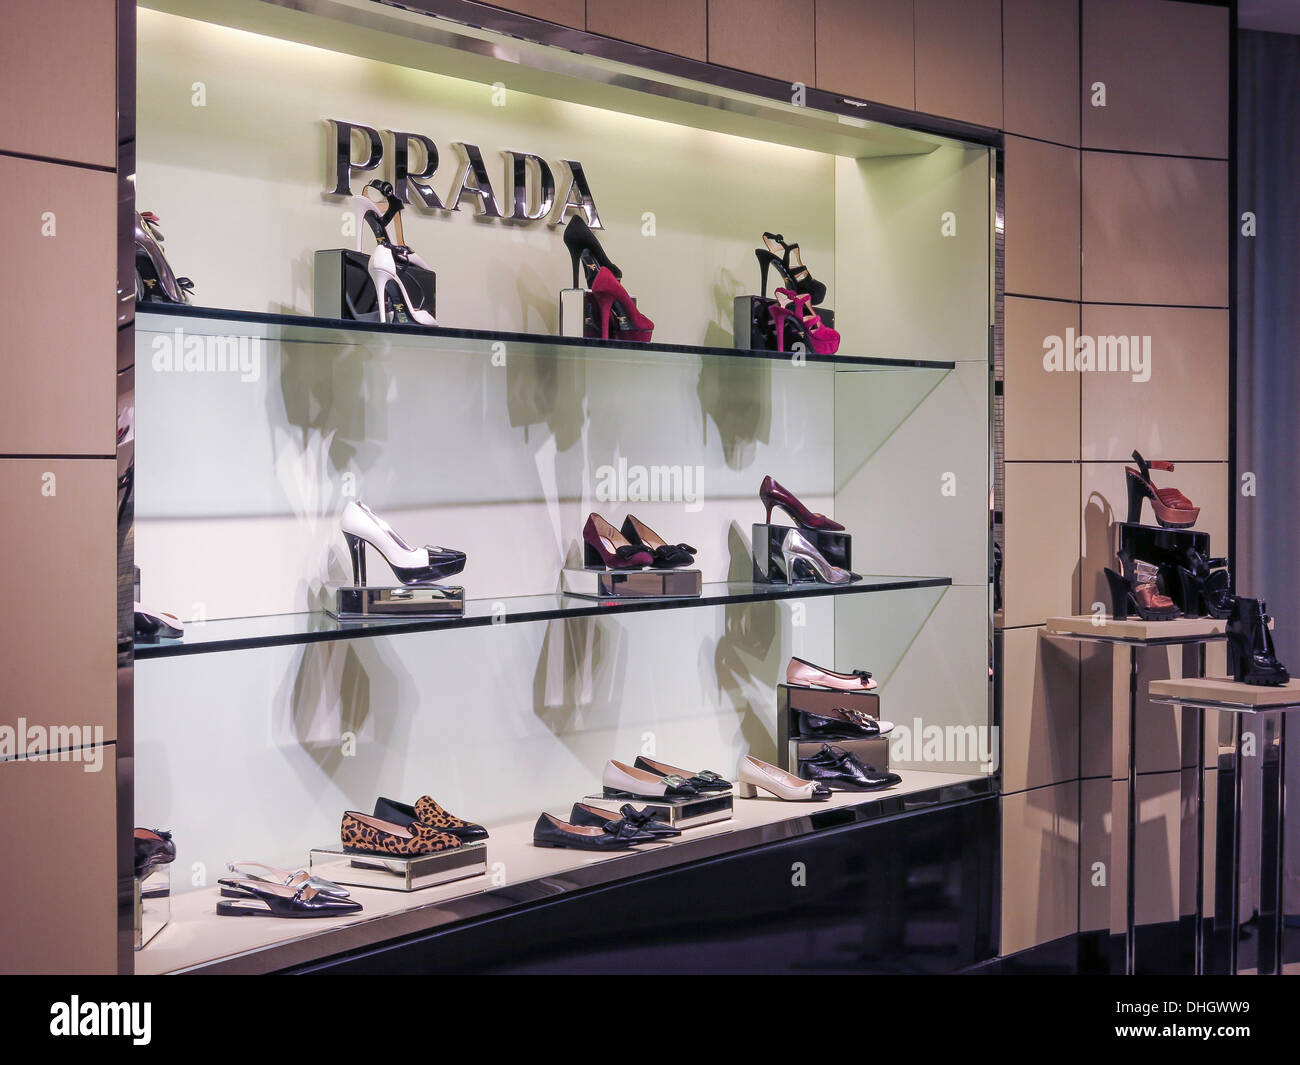 Prada Shoe Display in Bloomingdale's Department Store Interior, NYC Stock  Photo - Alamy